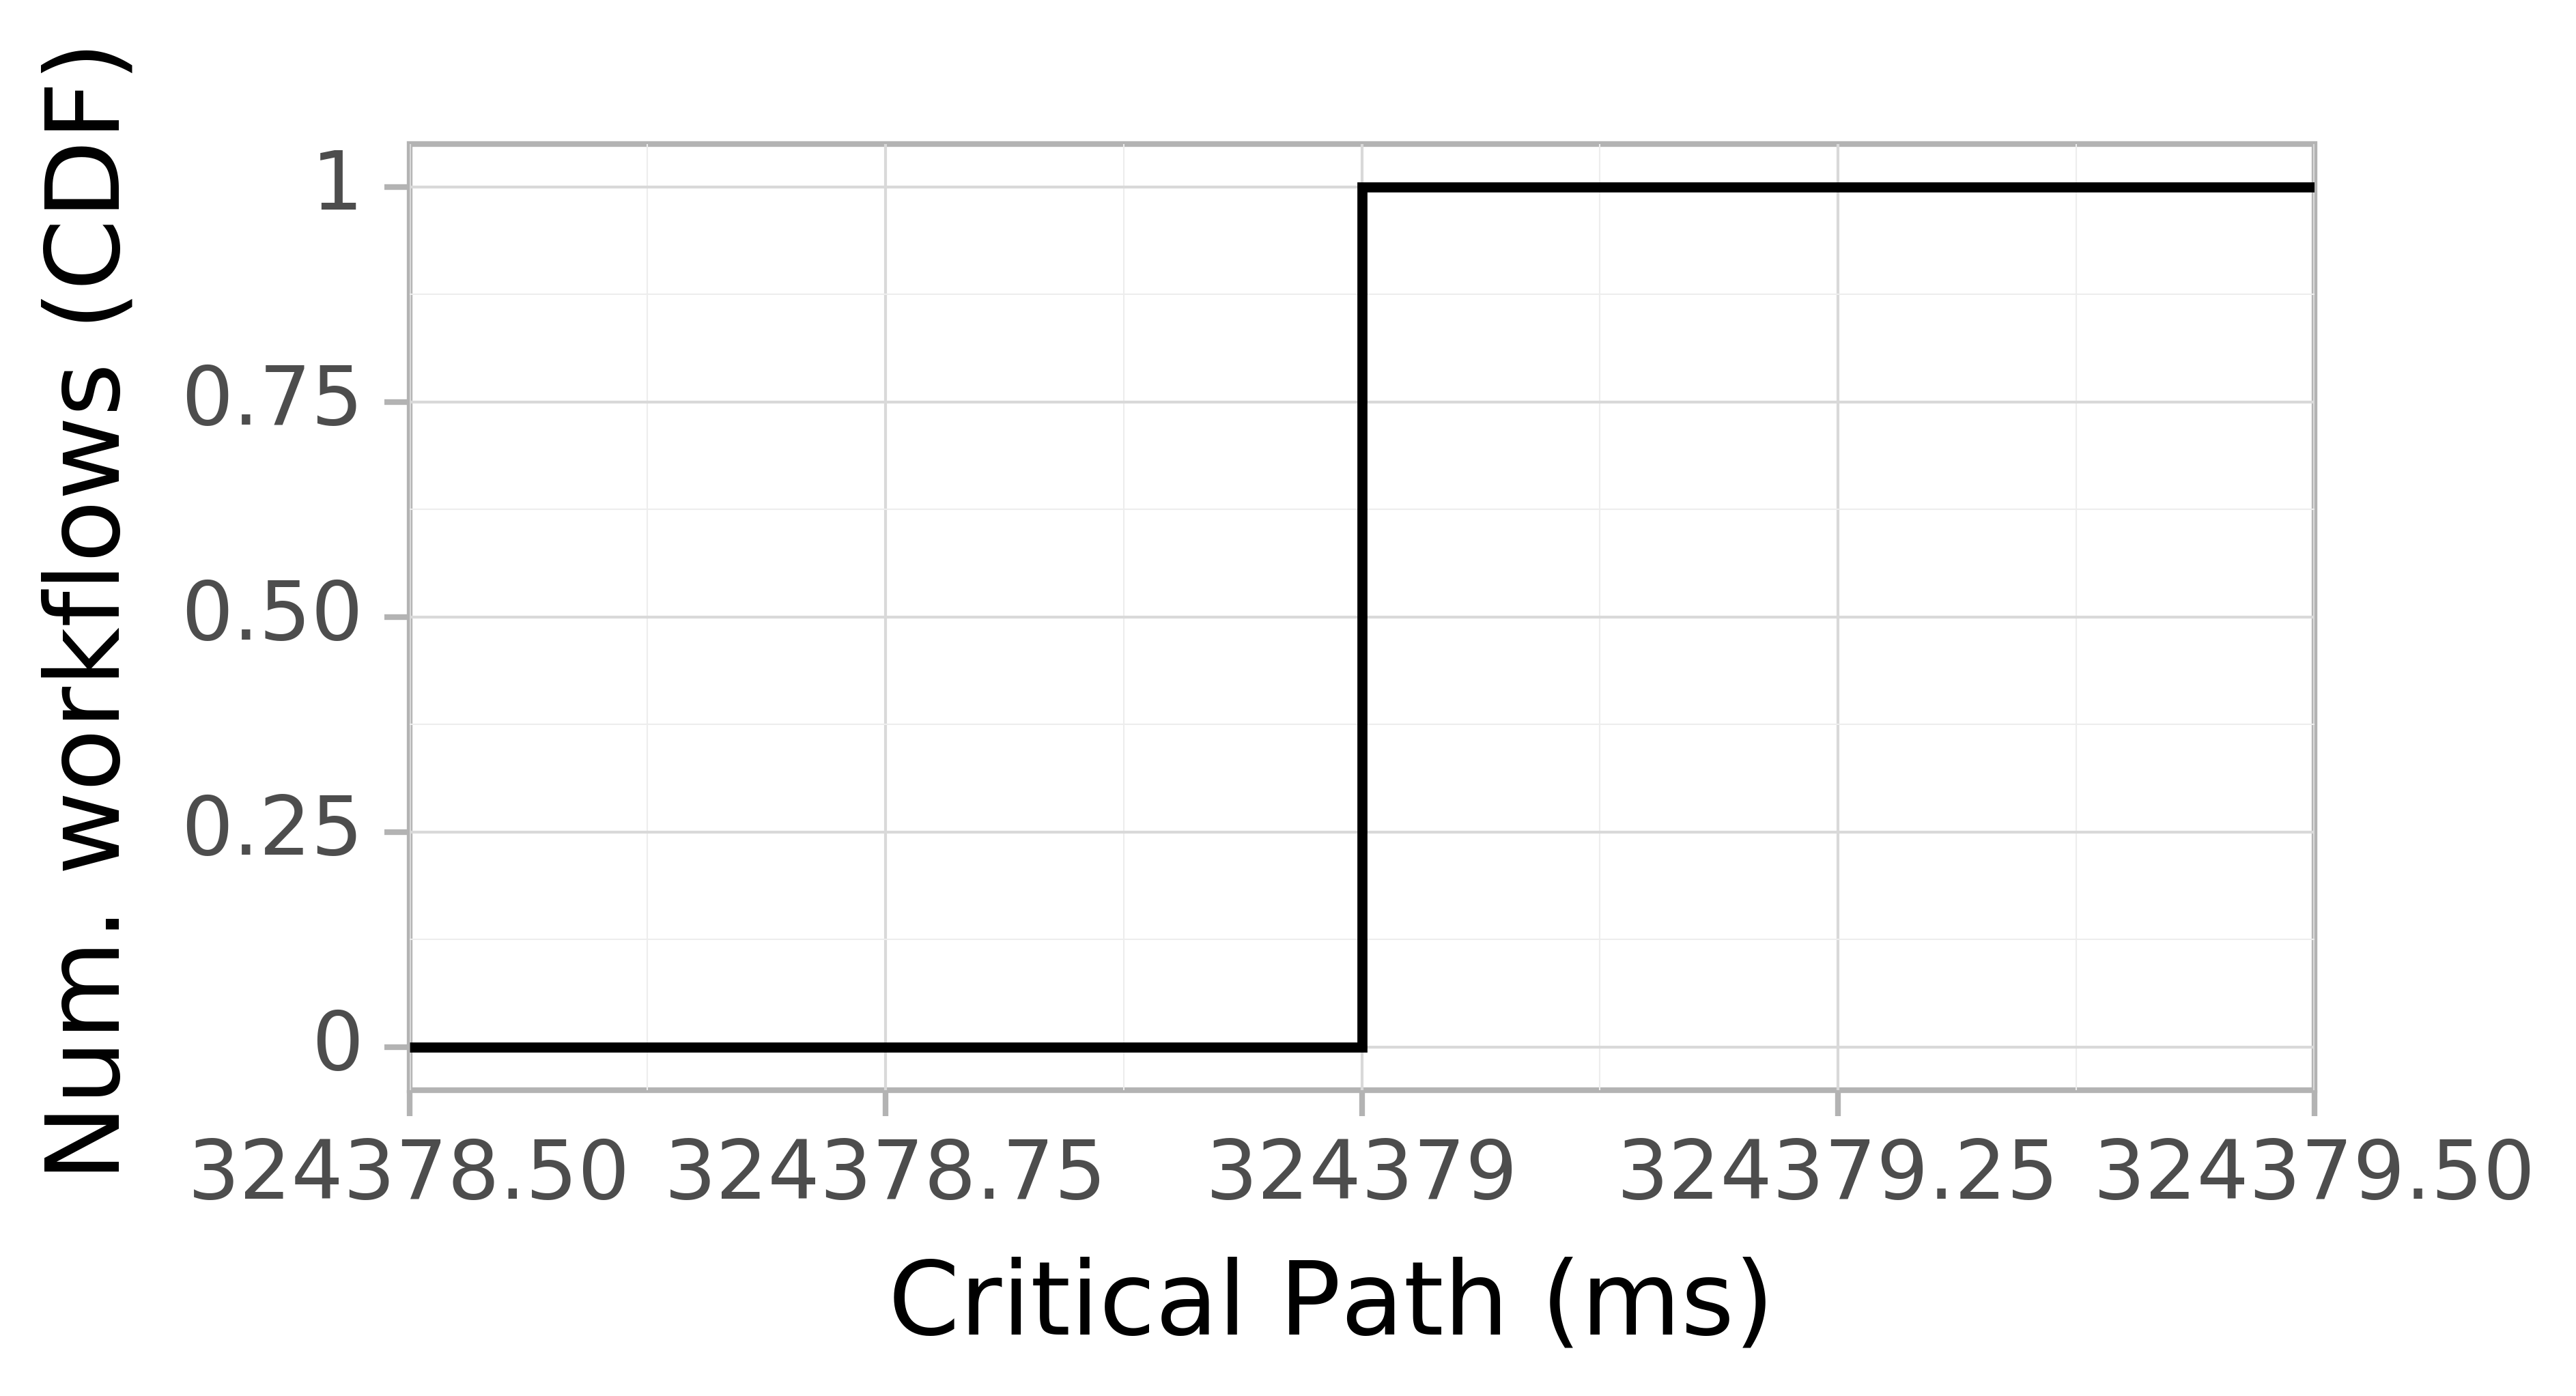 Job runtime CDF graph for the workflowhub_montage_dataset-02_degree-2-0_osg_schema-0-2_montage-2-0-osg-run007 trace.